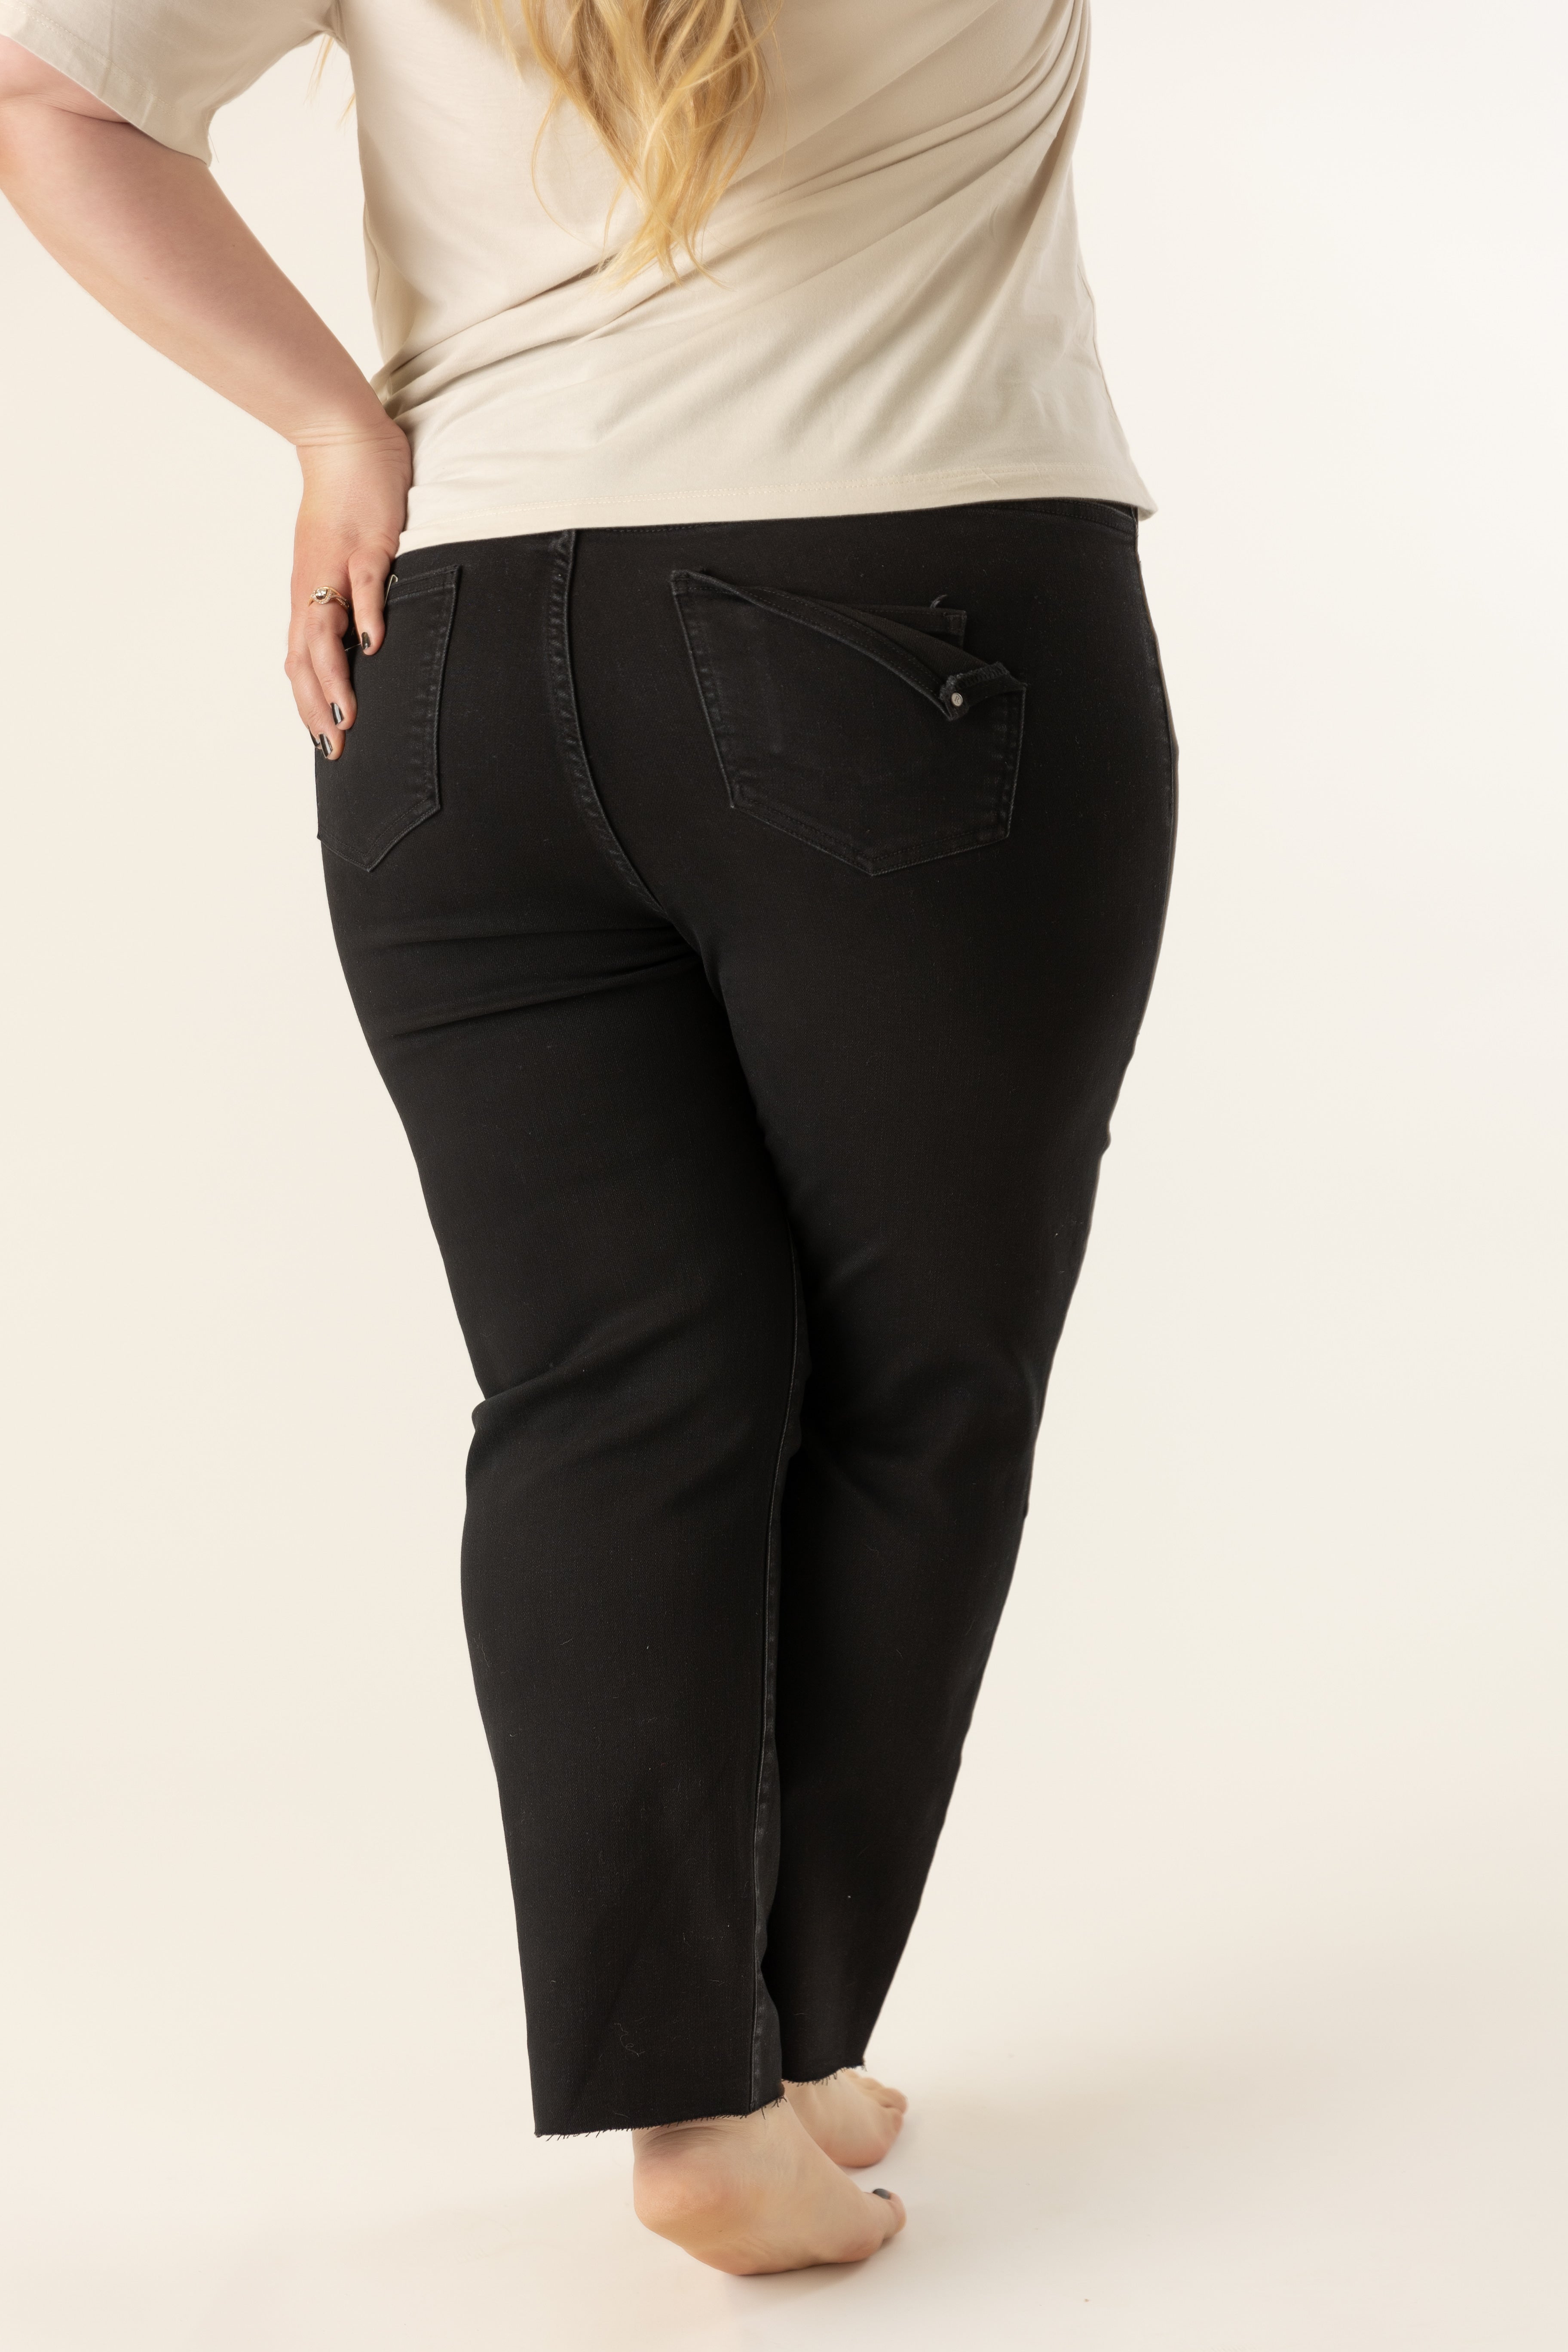 NEW Zara Classic Mom Fit Hi-Rise Ankle Length Black Denim Jeans Size 34/ US  2 | eBay